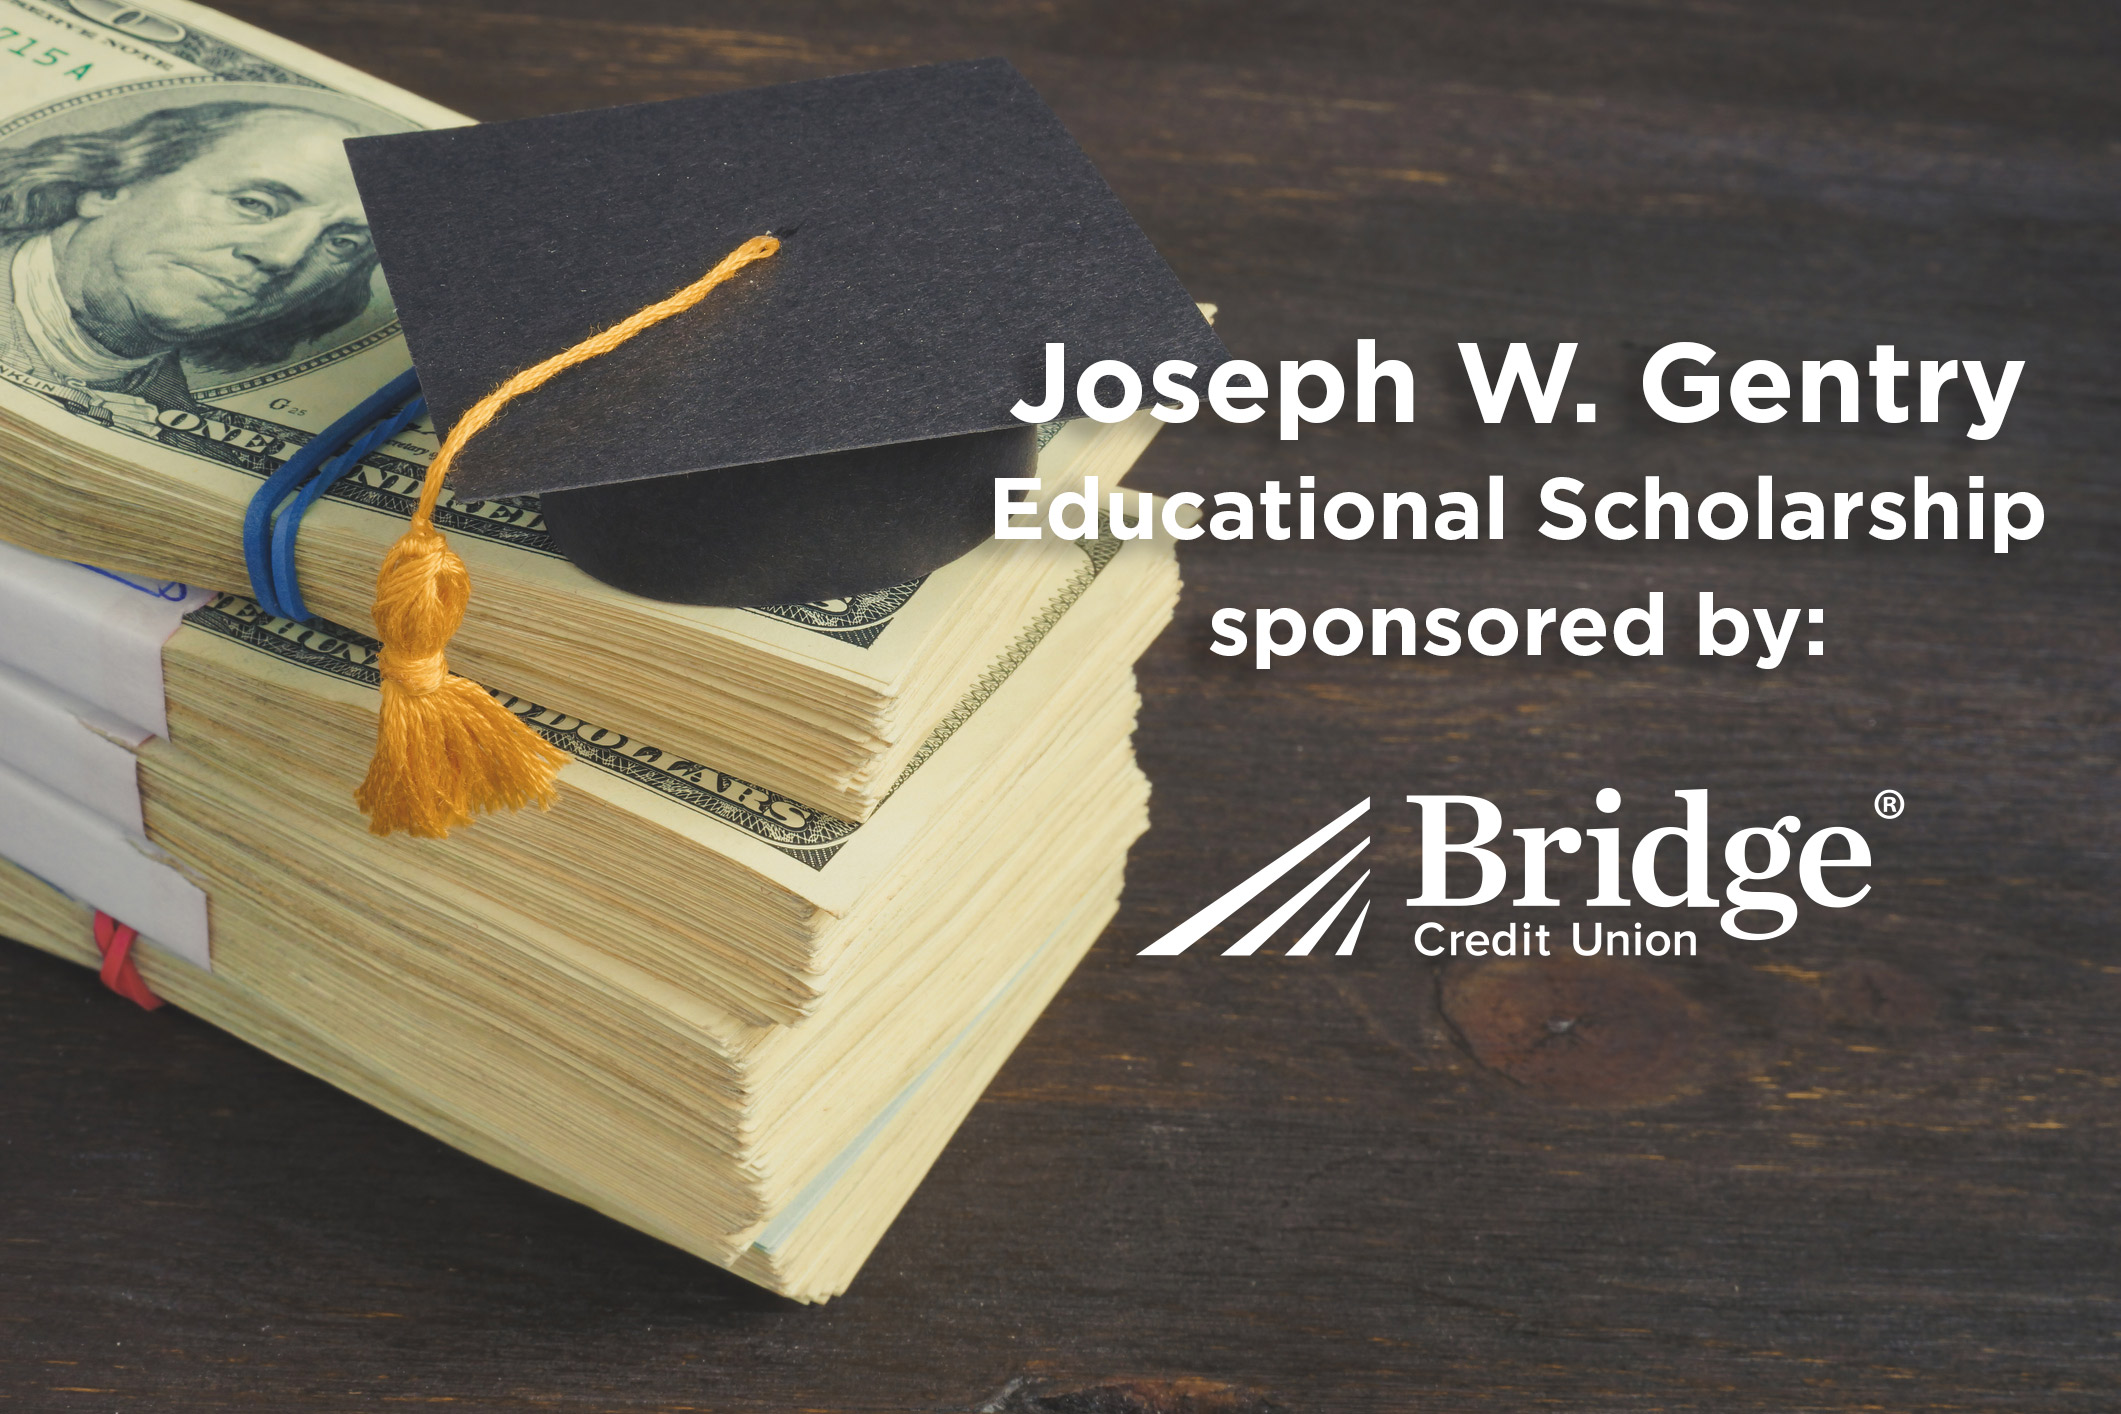 Joseph W. Gentry Scholarship Program